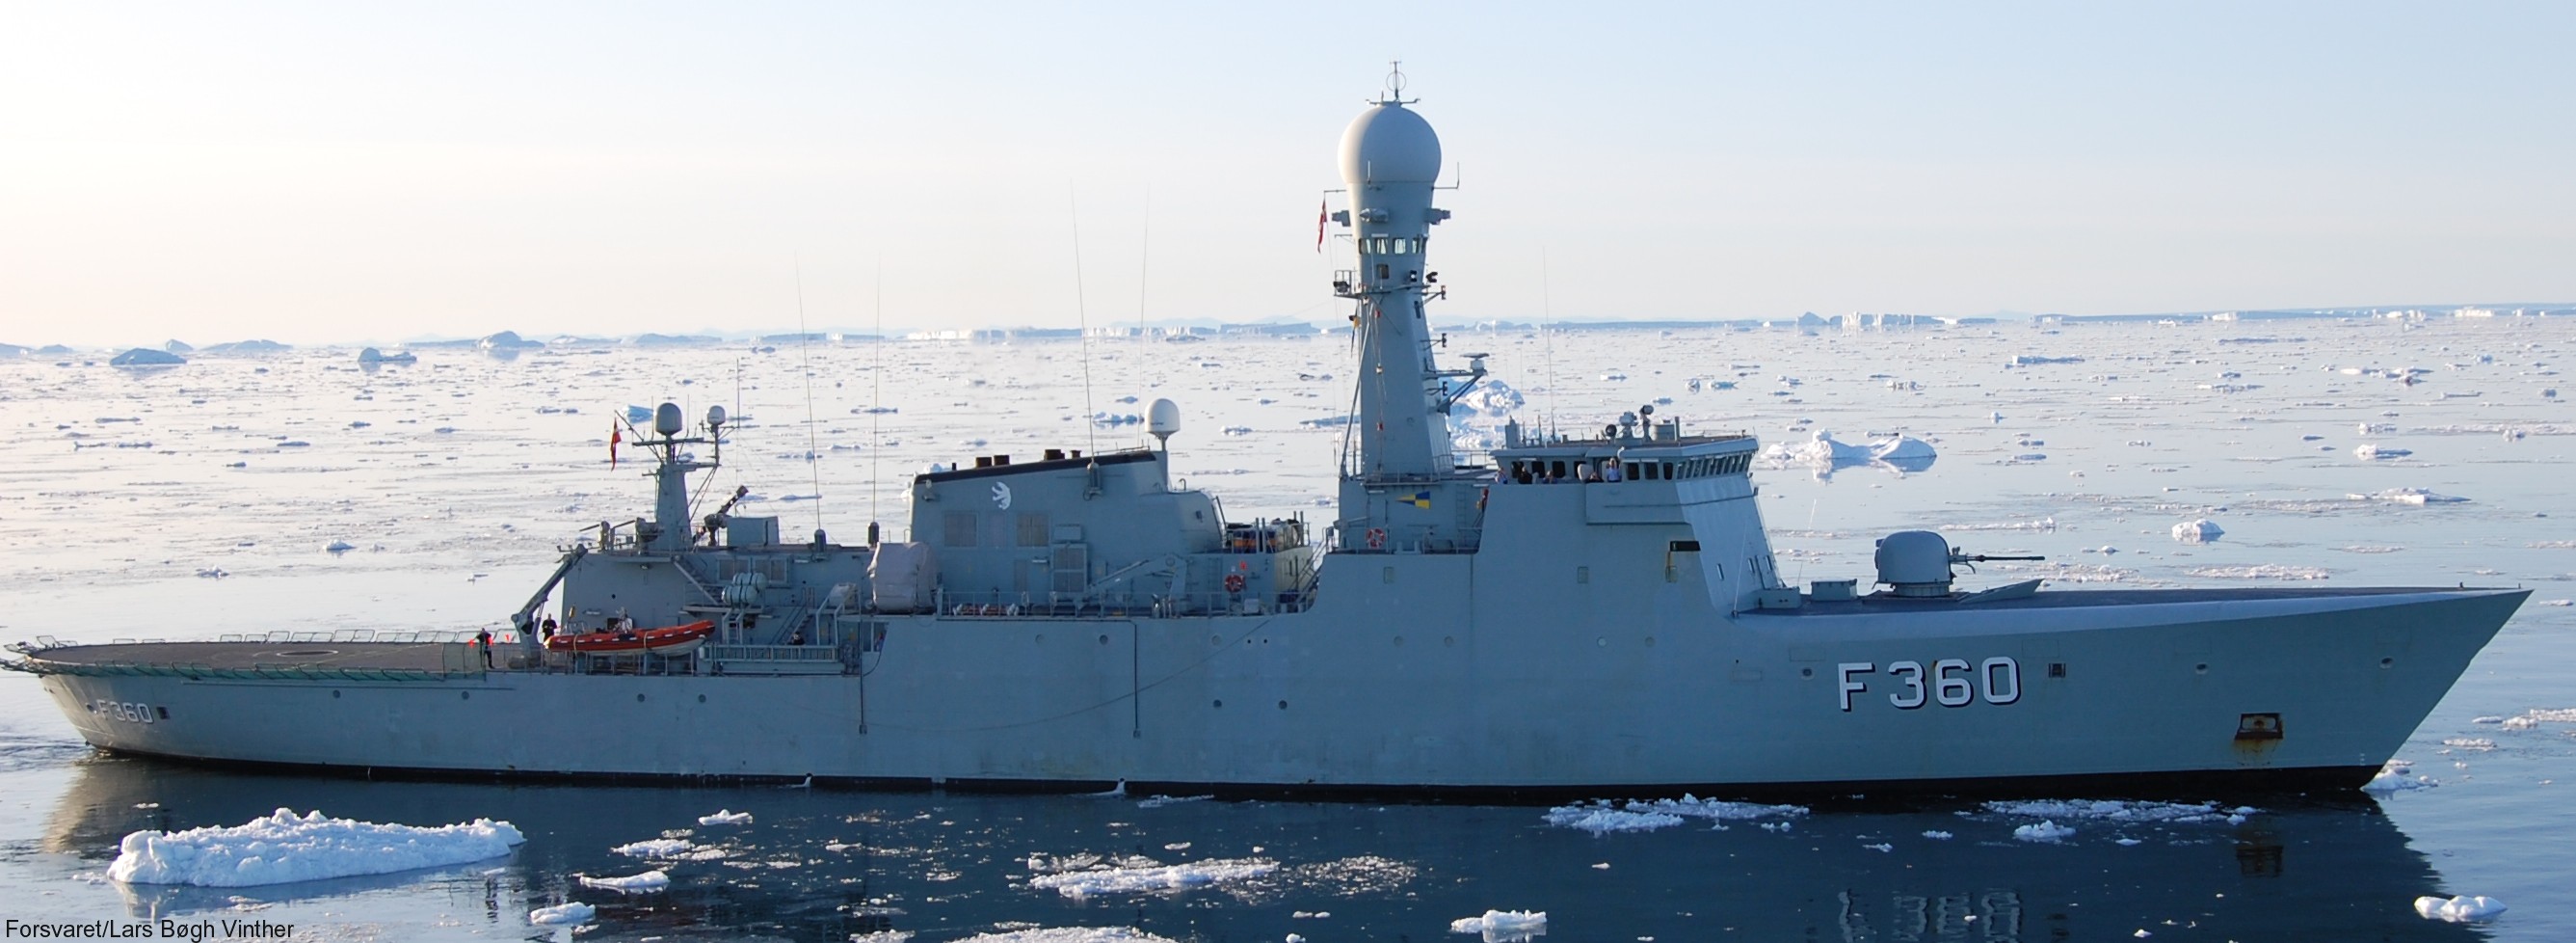 f-360 hdms hvidbjornen thetis class ocean patrol frigate royal danish navy kongelige danske marine kdm inspektionsskibet 24 arctic ice